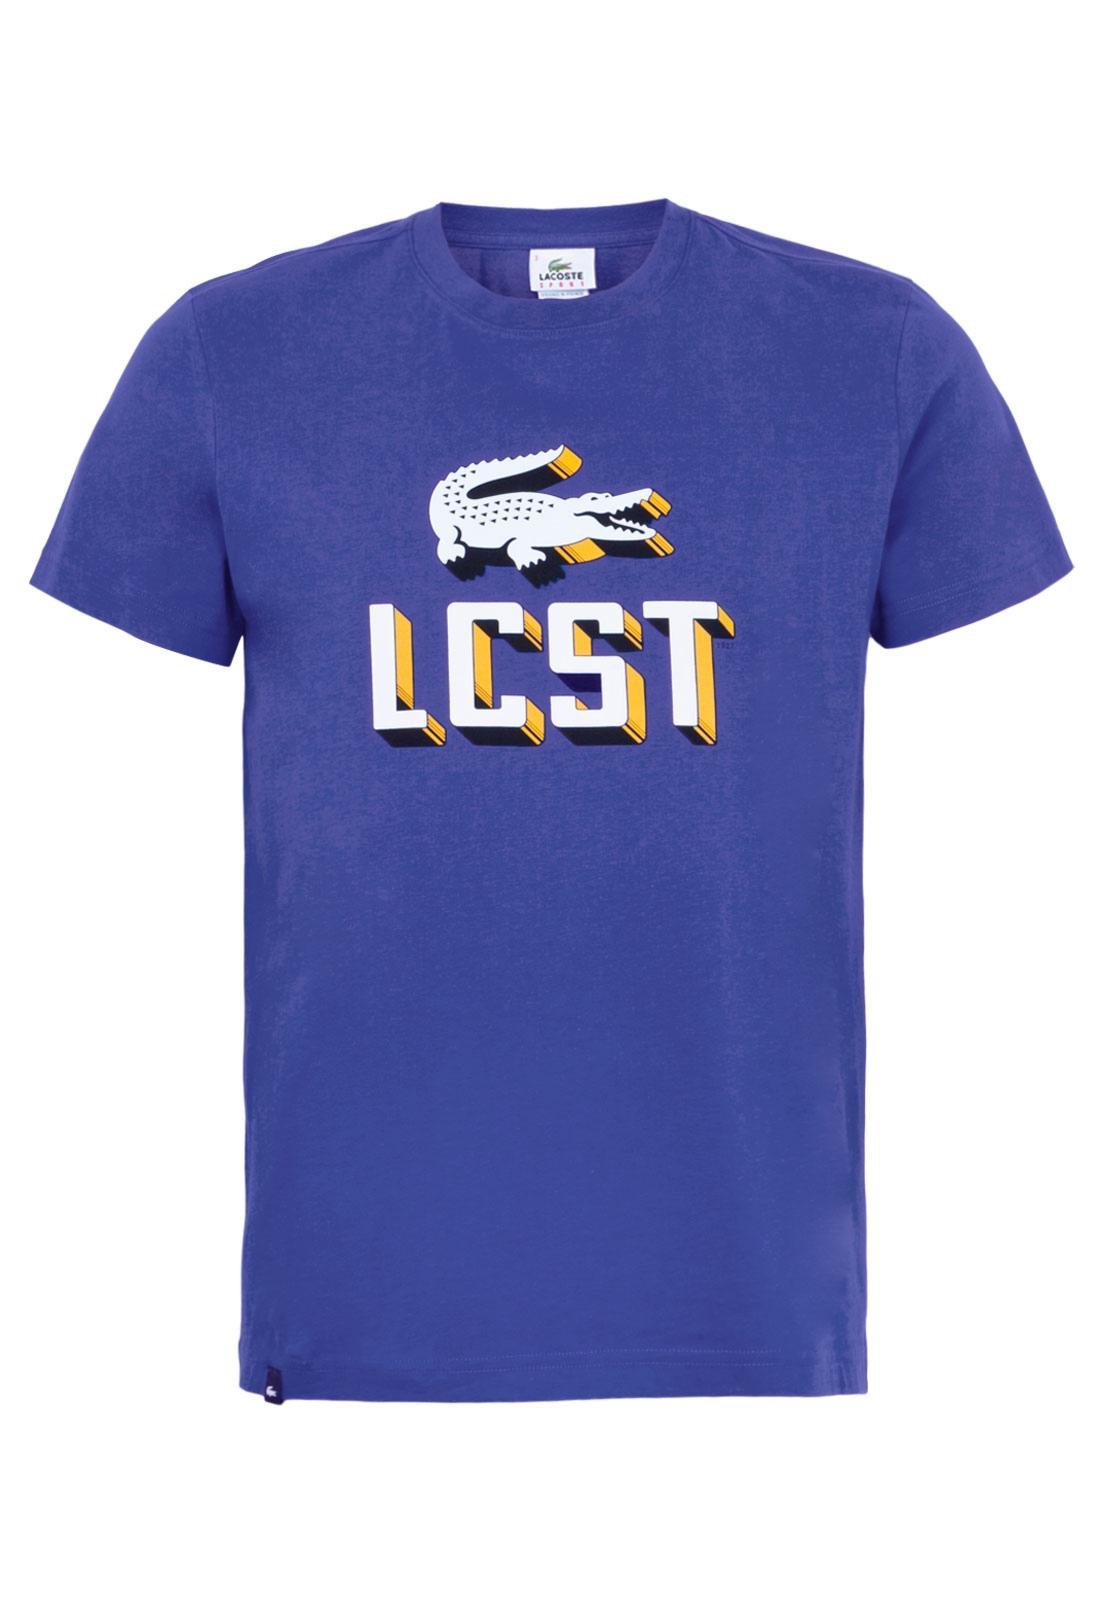 Camiseta Lacoste Brand Azul - Compre Agora